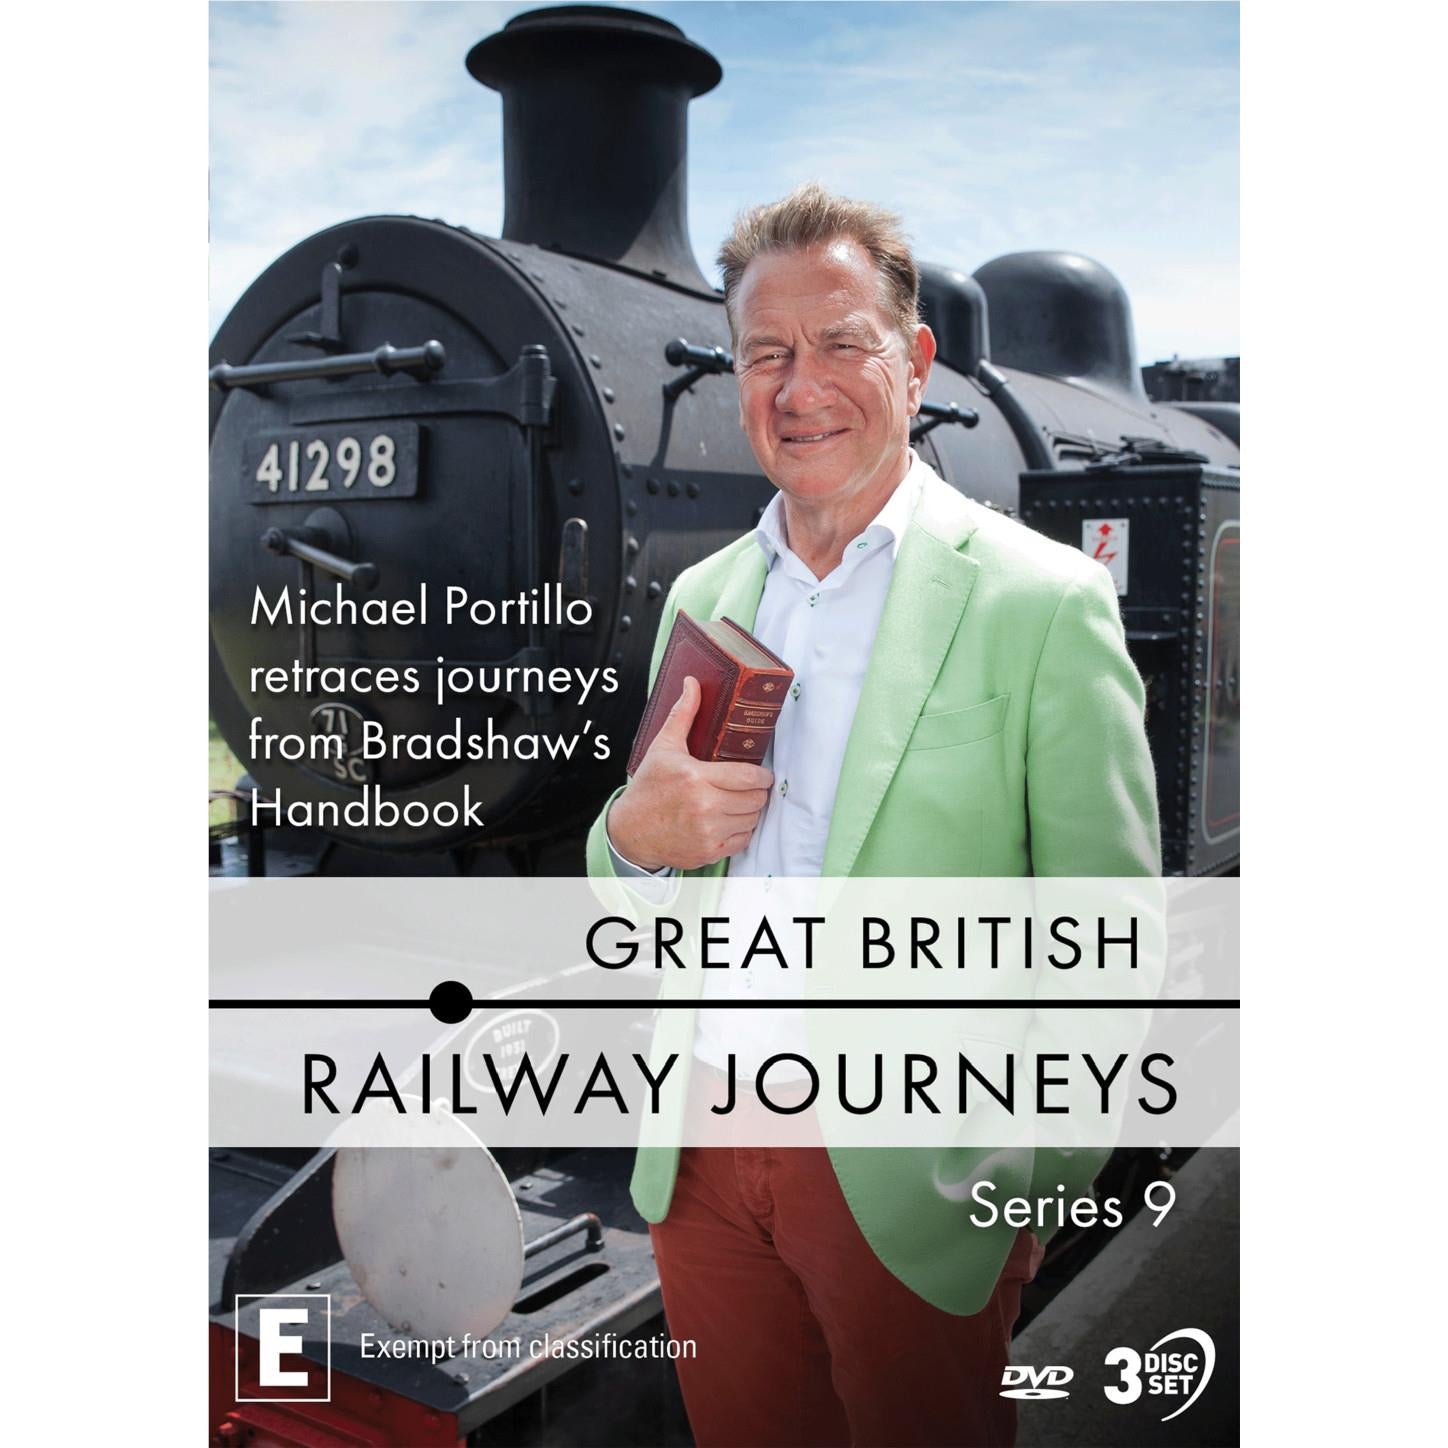 great british railway journeys with michael portillo - series 9